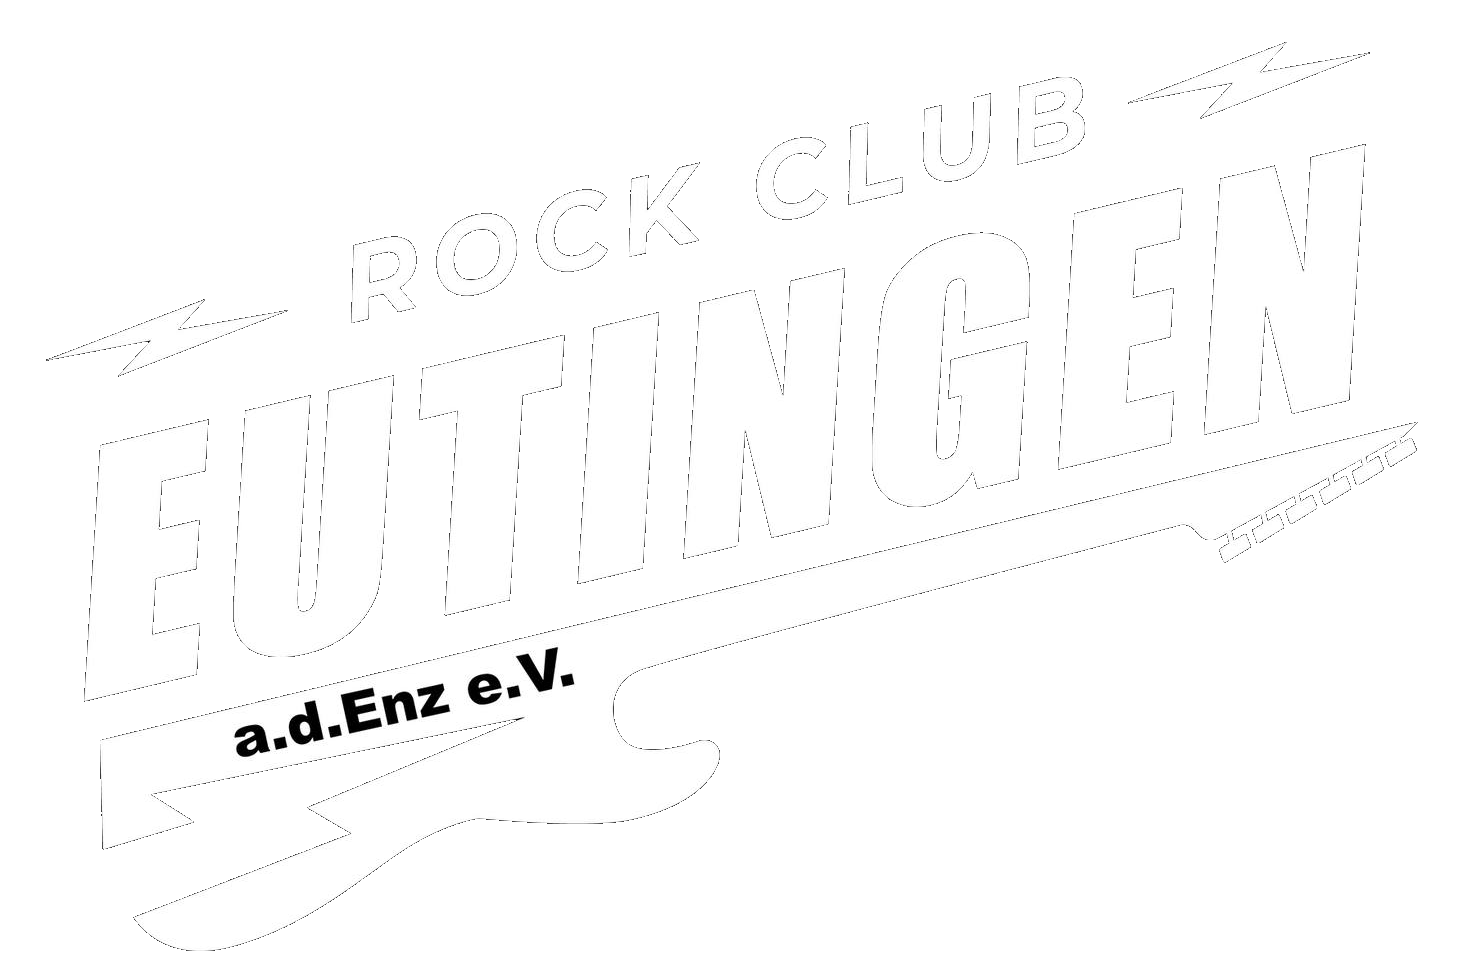 Rock_Club_Eutingen_Logo_Transparent